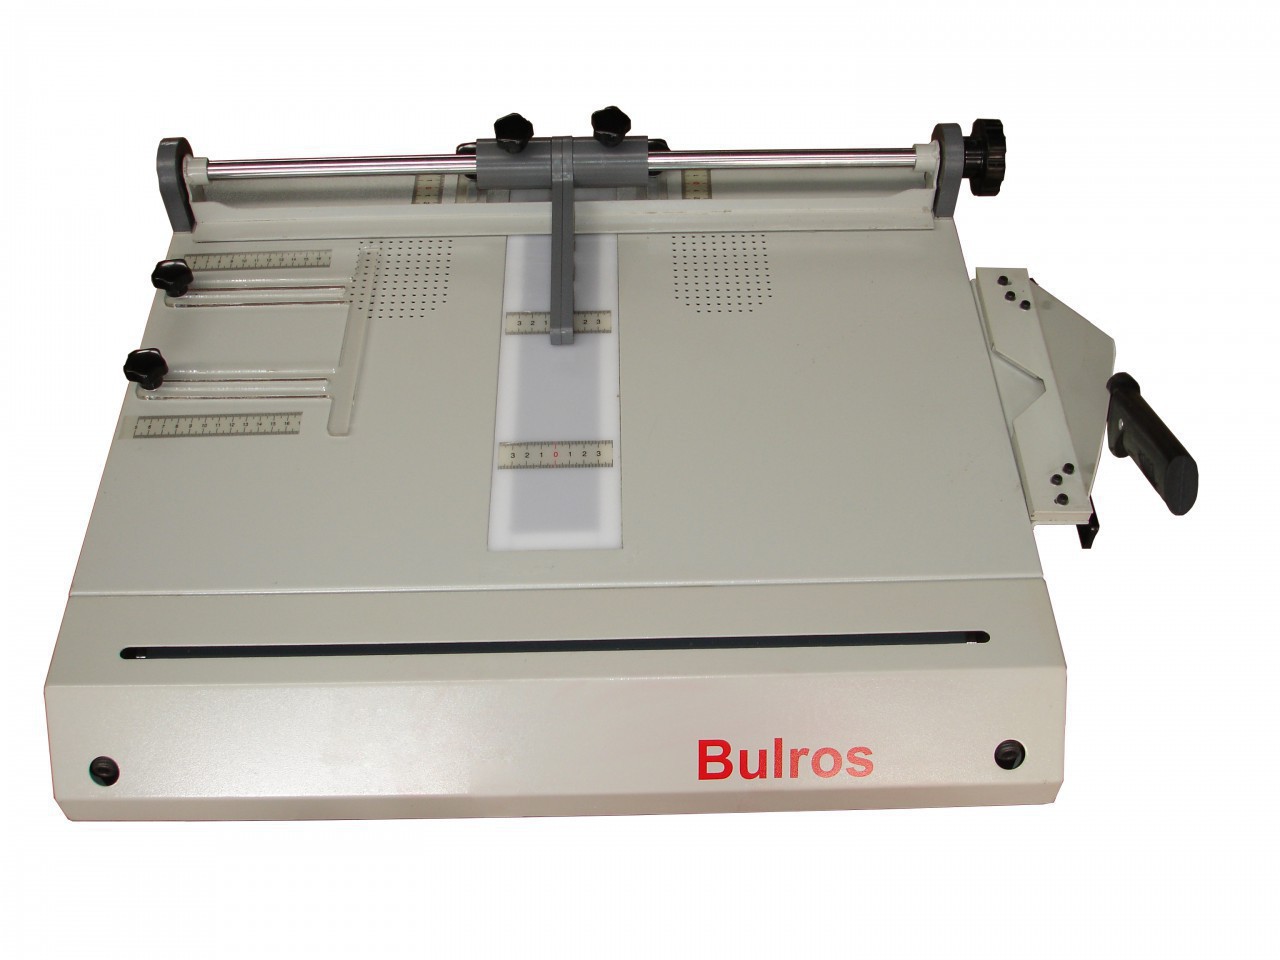 Крышкоделательный аппарат Bulros professional series 100H, A4 - 65576 руб.